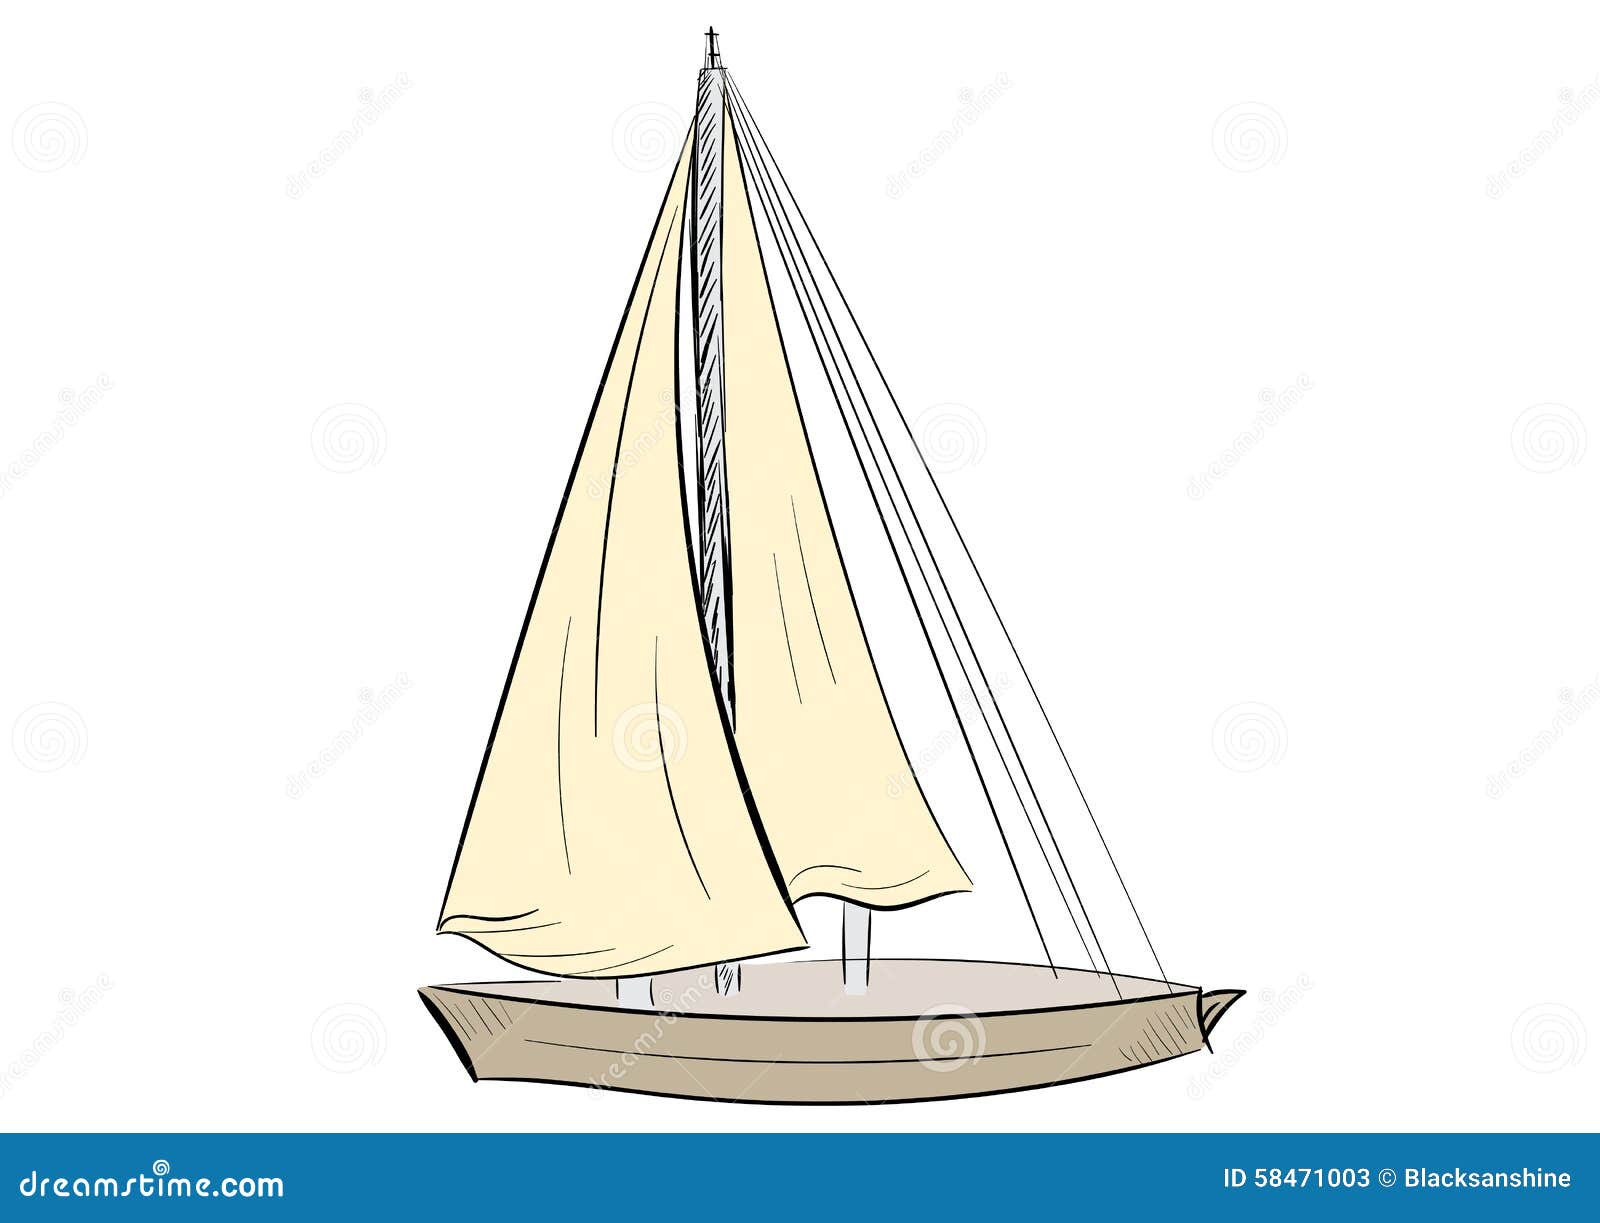 Sailboat Sketch Stock Vector - Image: 58471003